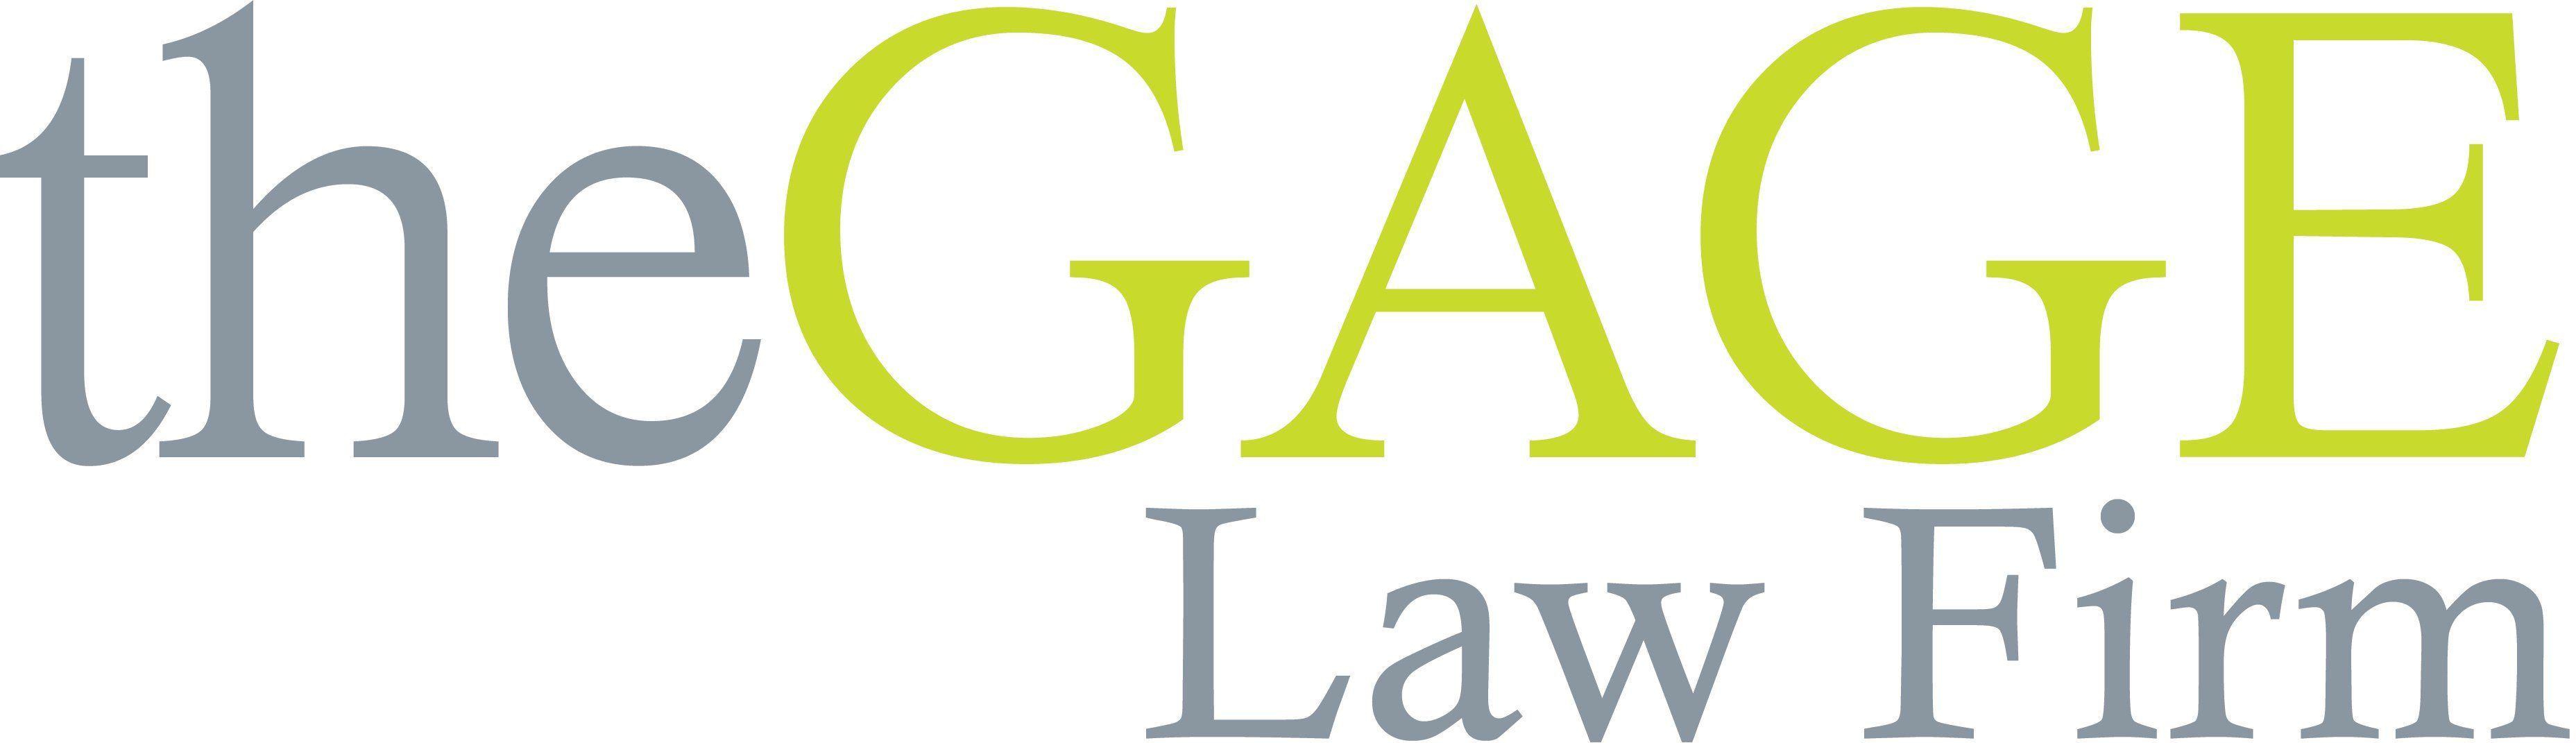 Atlanta gay and lesbian legal aid